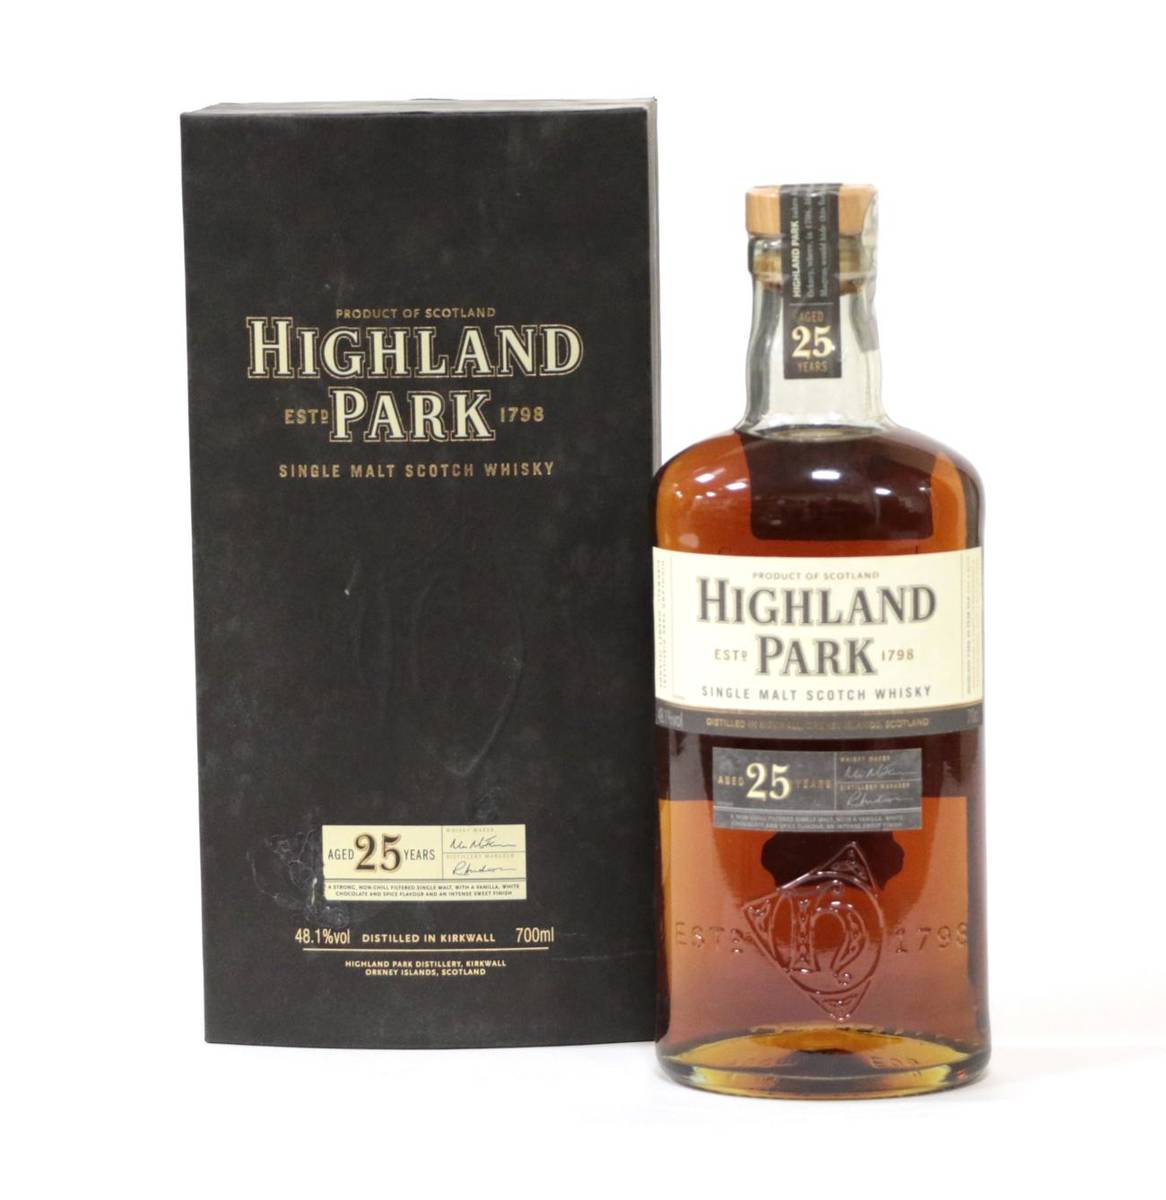 Lot 2184 - Highland Park 25 Year Old Single Malt Scotch Whisky, 48.1%, 700ml, in presentation box